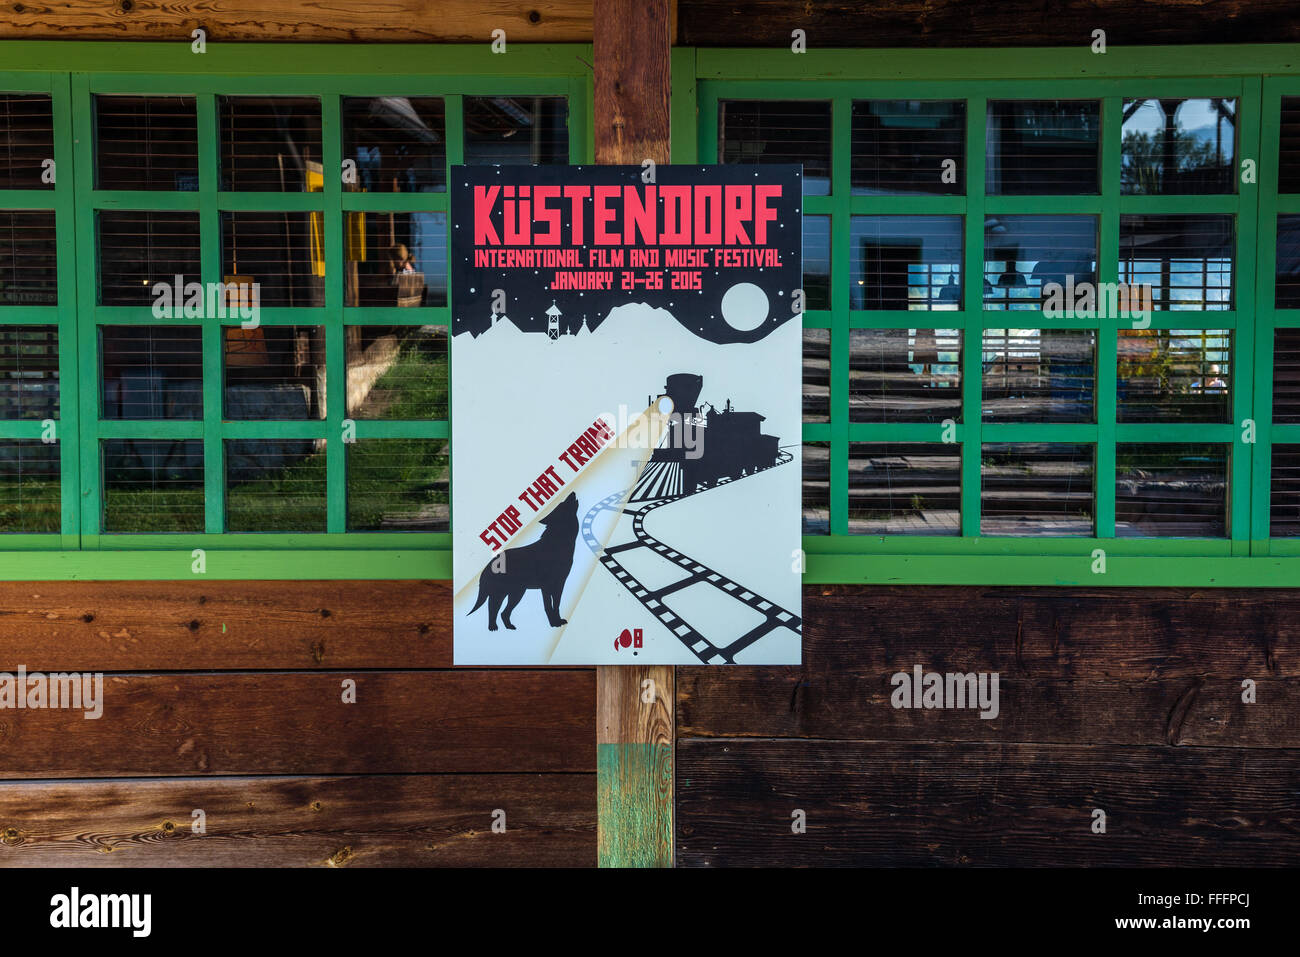 Kustendorf movie festival poster in traditional Drvengrad village built by Emir Kusturica in Zlatibor District, Serbia Stock Photo